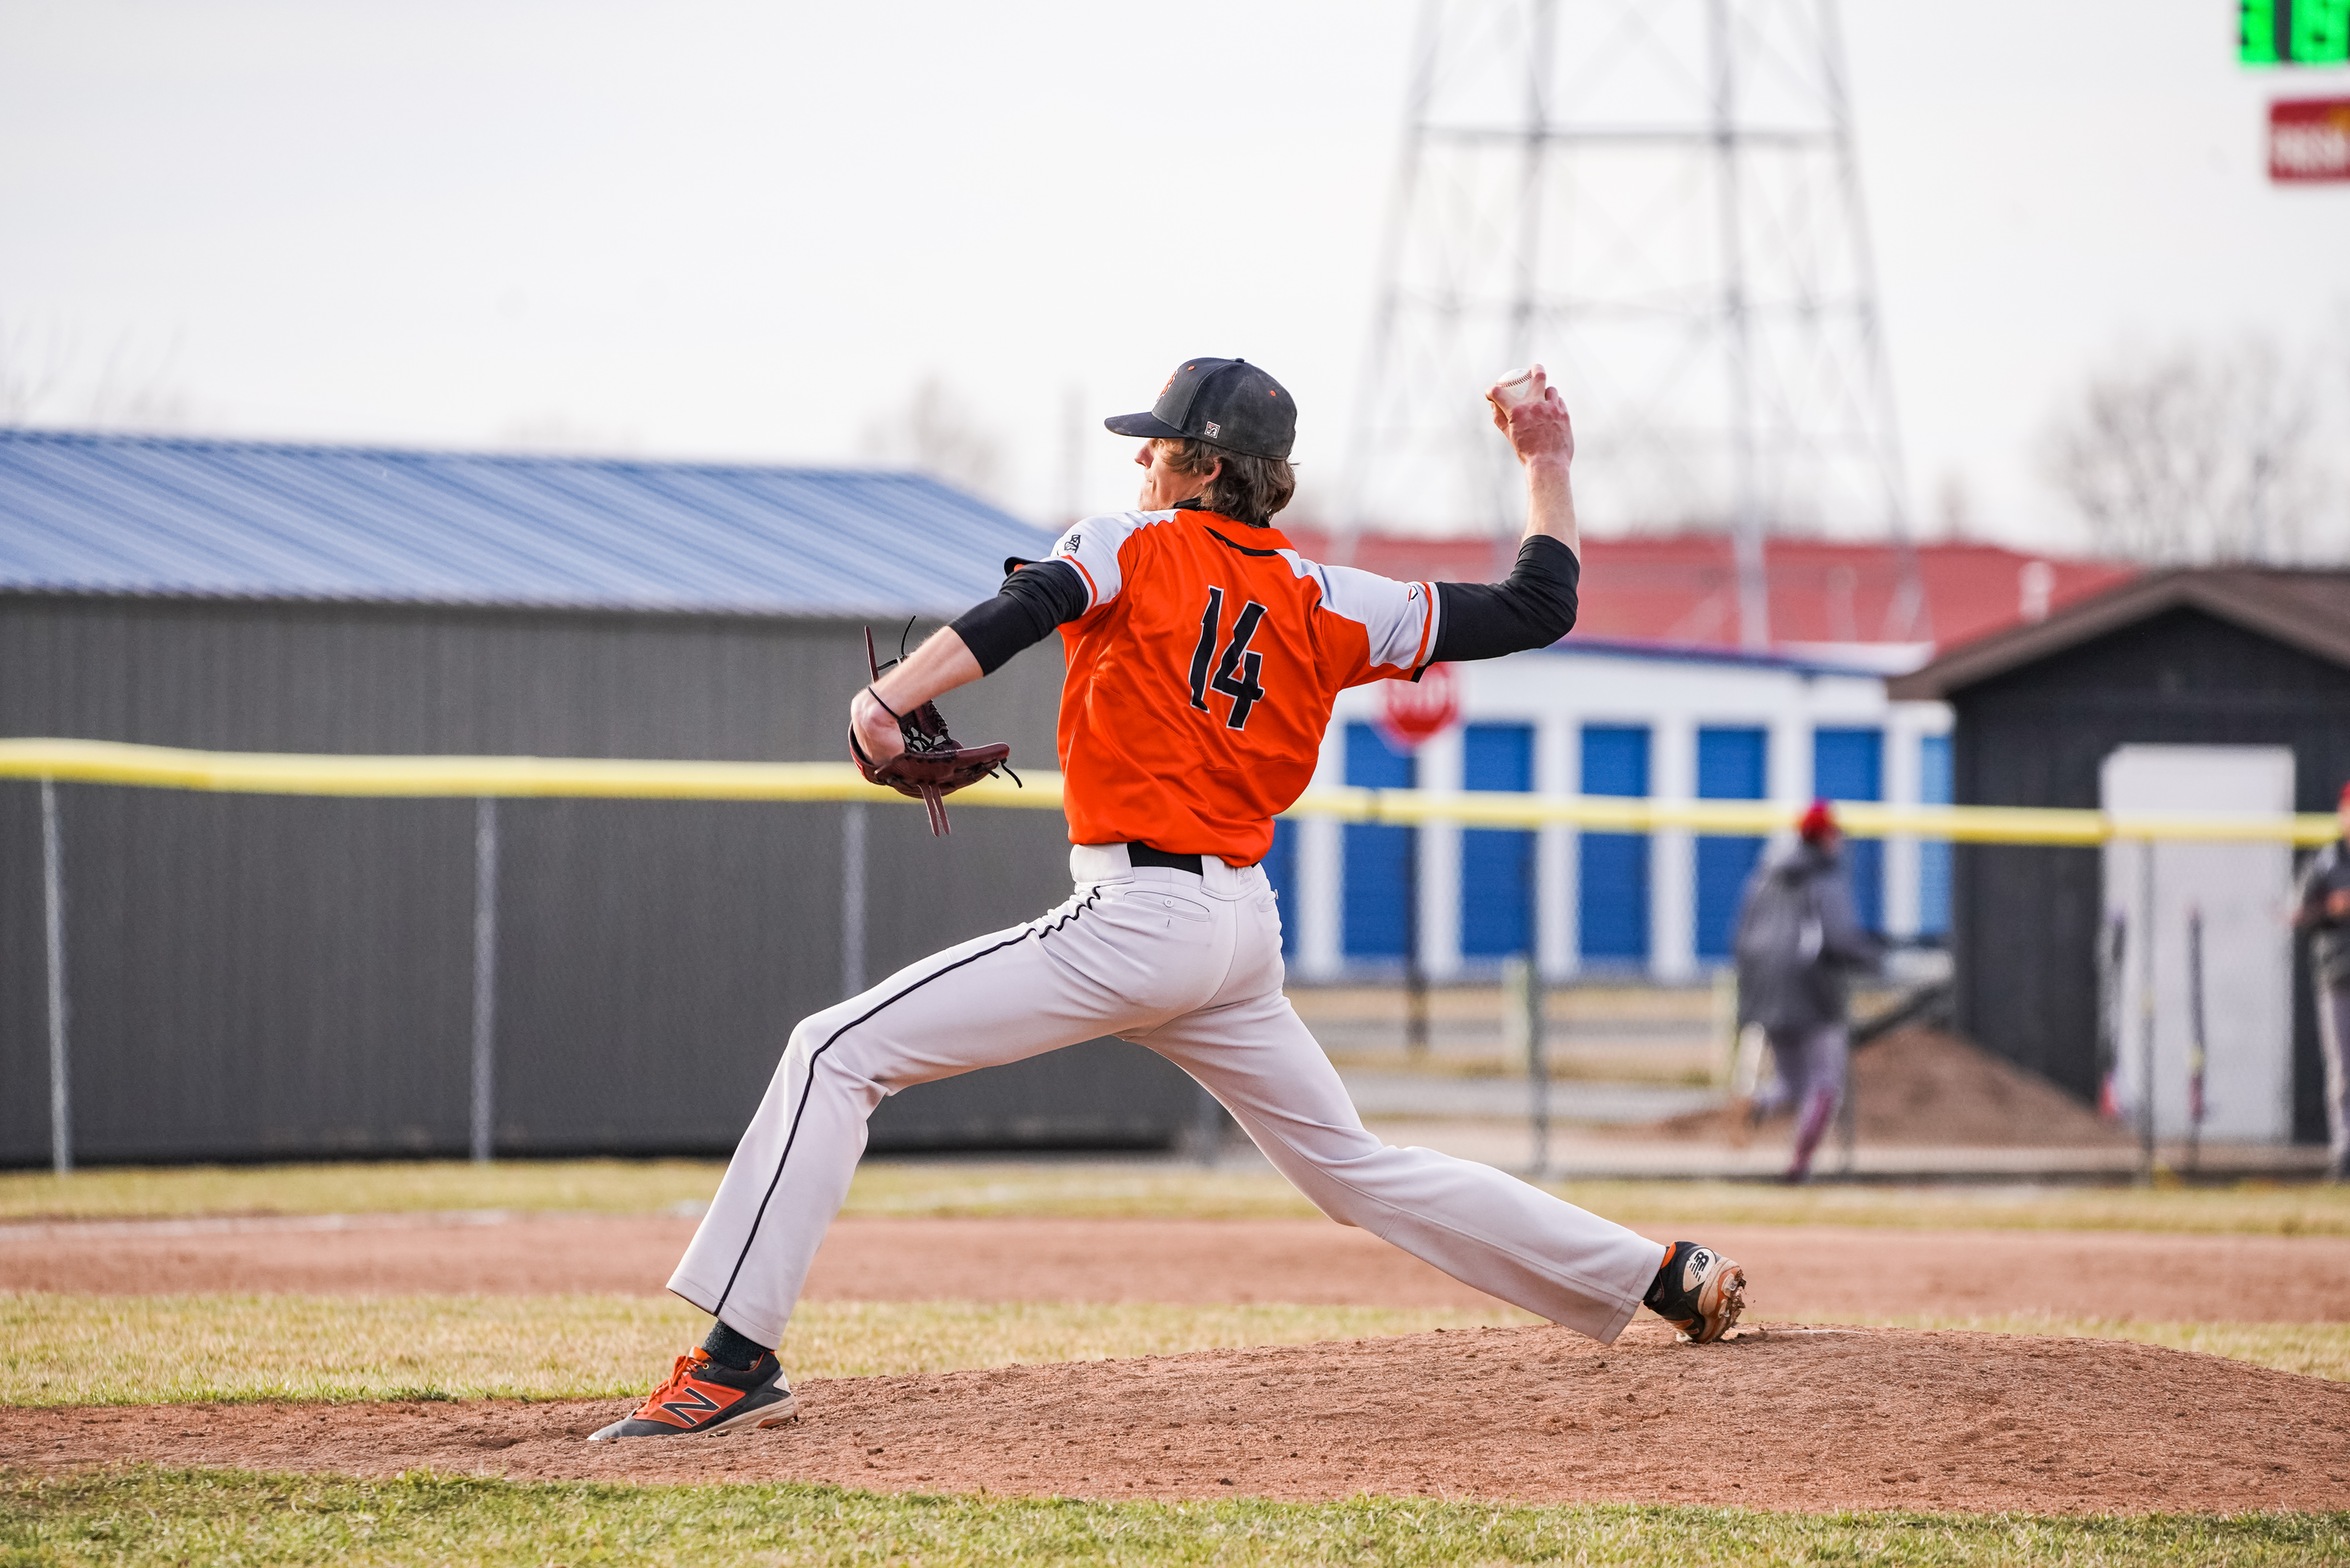 pitcher in orange throwing hard